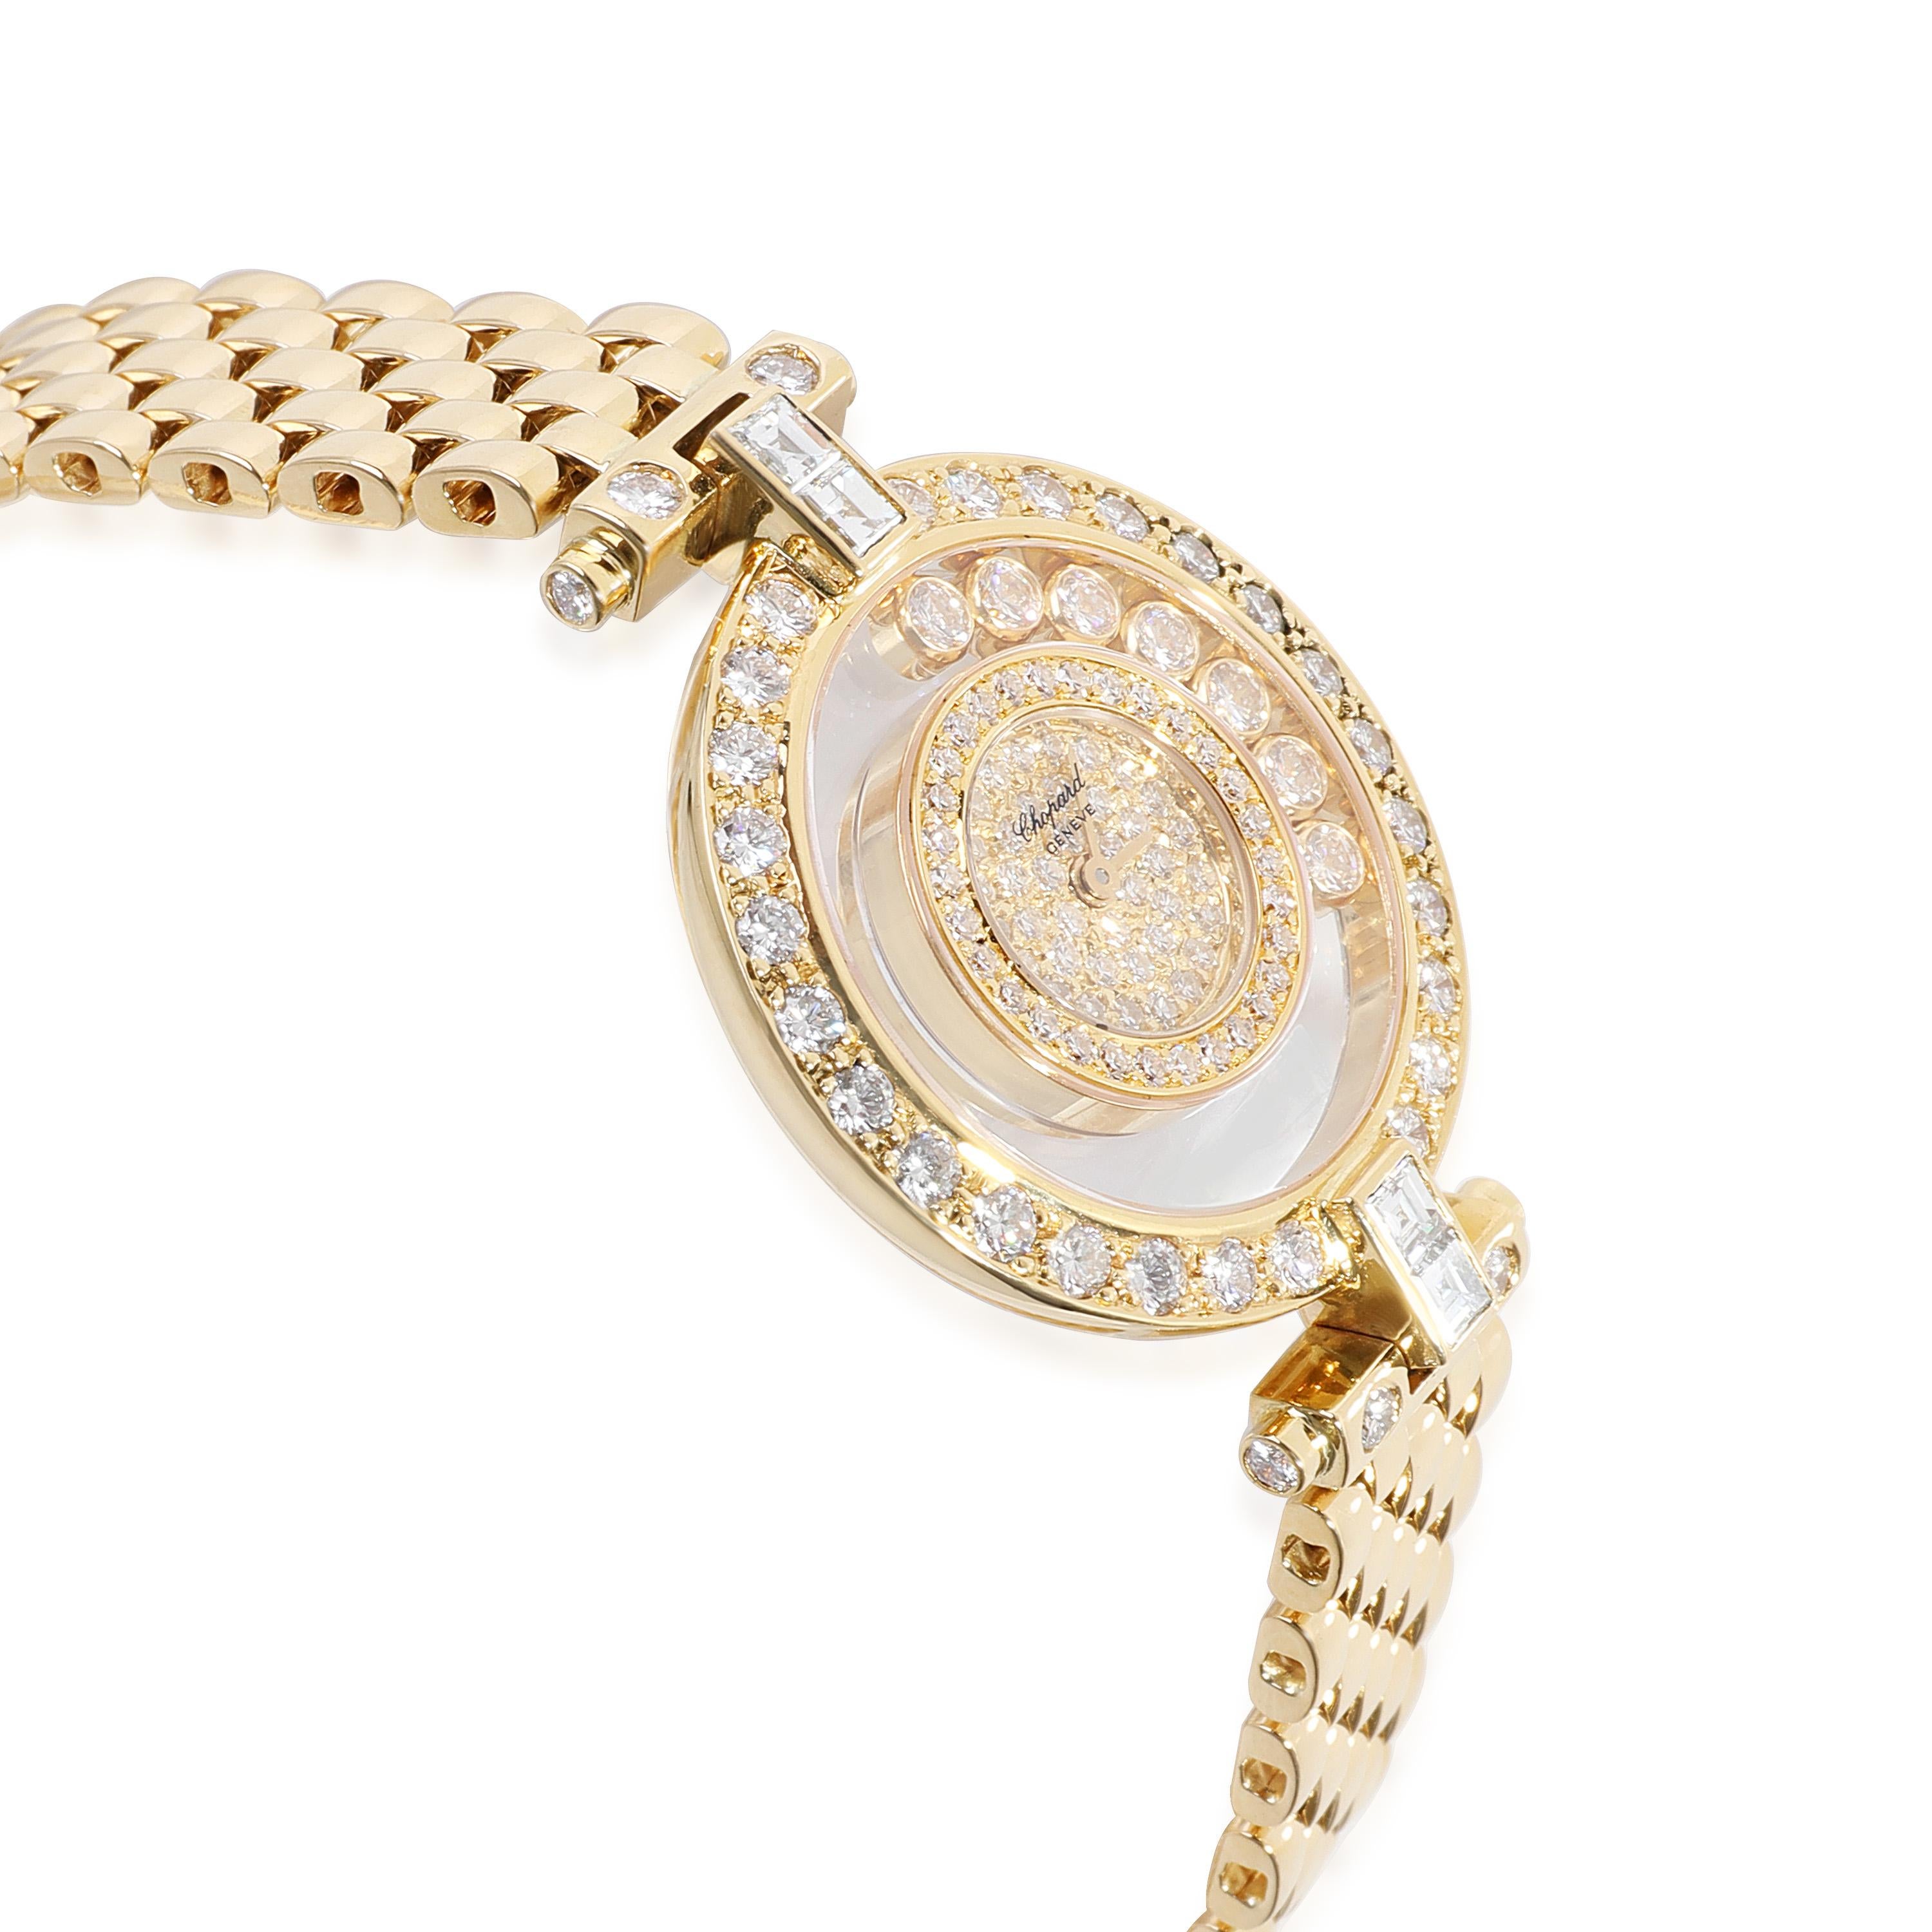 chopard gold watch